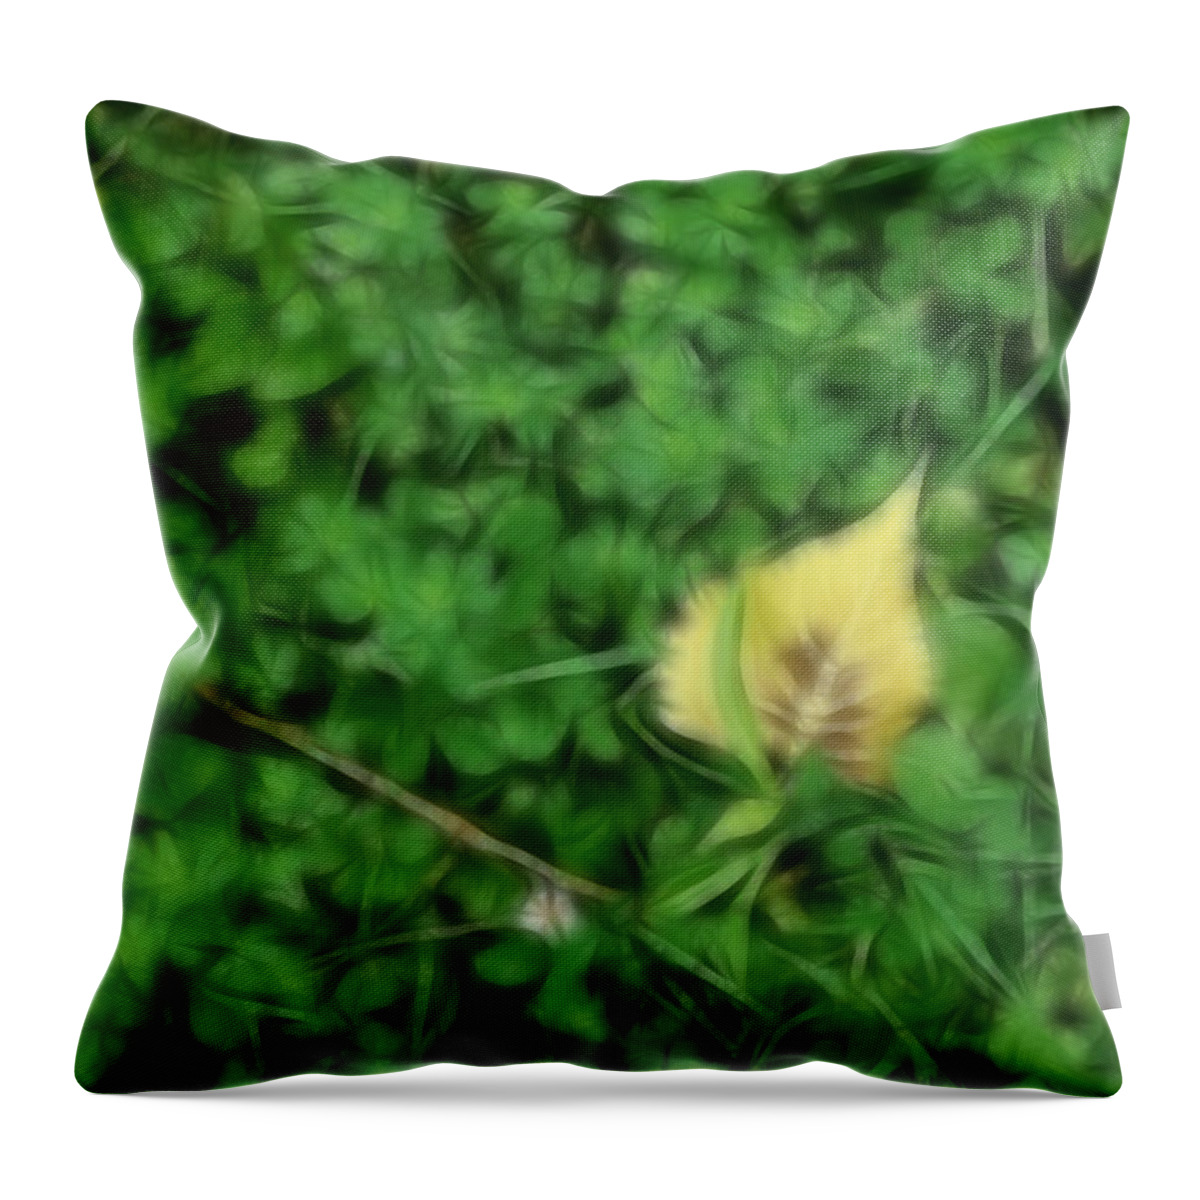 Green Throw Pillow featuring the photograph Dreamy Gardens 4 by Rhonda Barrett